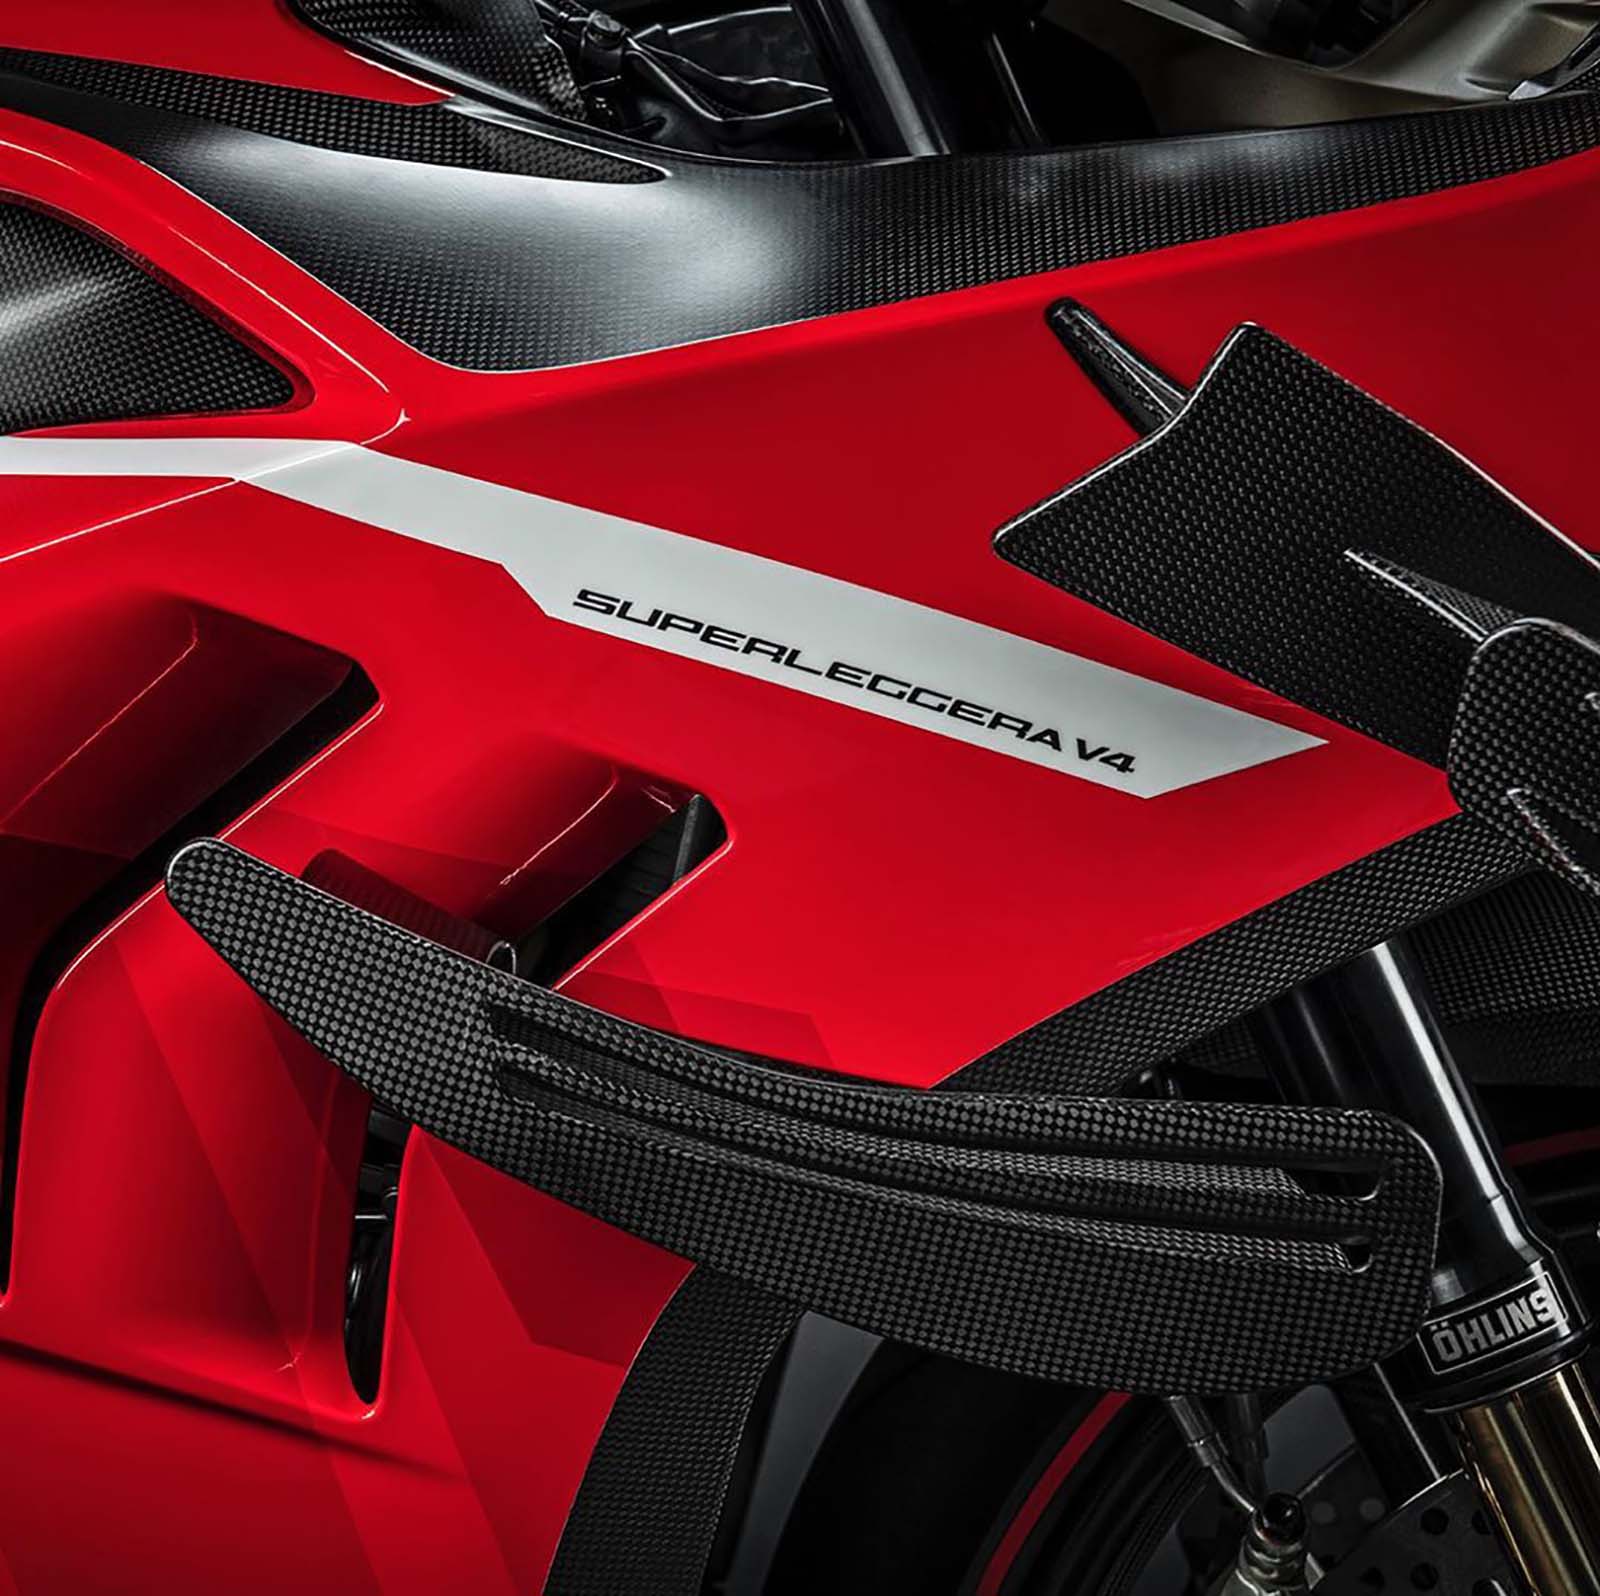 Here Are the First Photo of the Ducati Superleggera V4